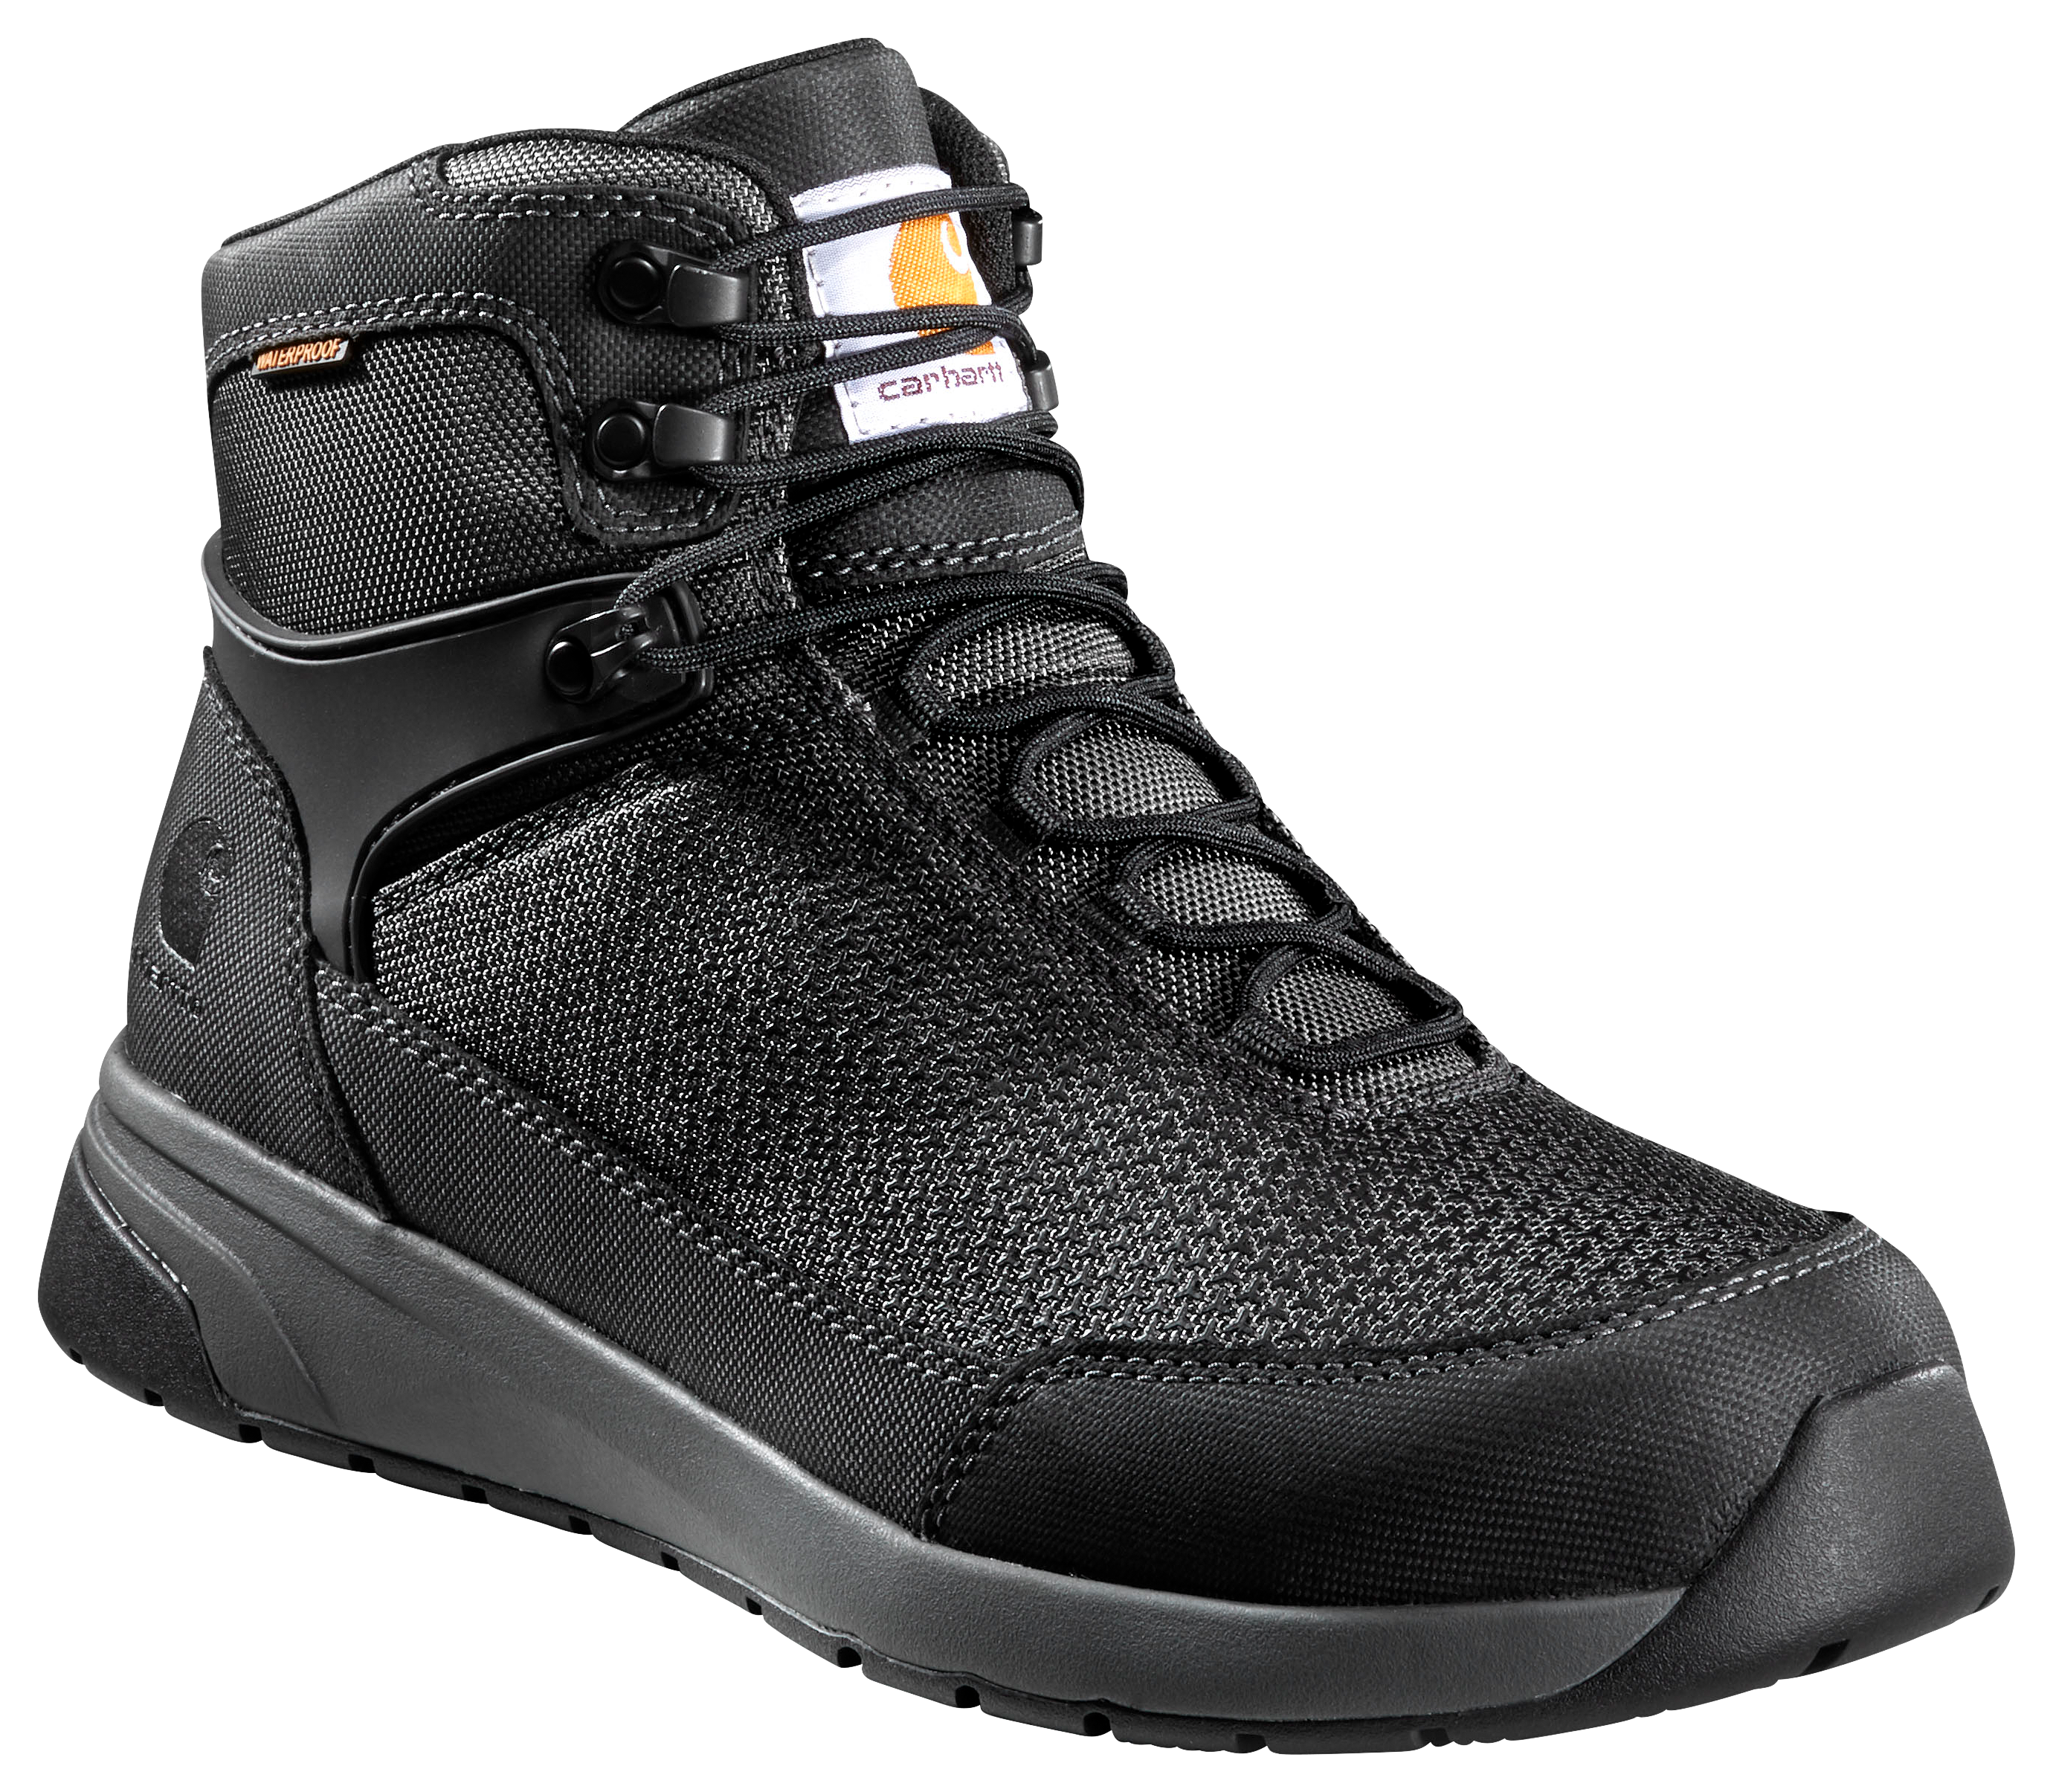 Carhartt Force 6"" Nano Composite-Toe Work Boots for Men - Black - 15W